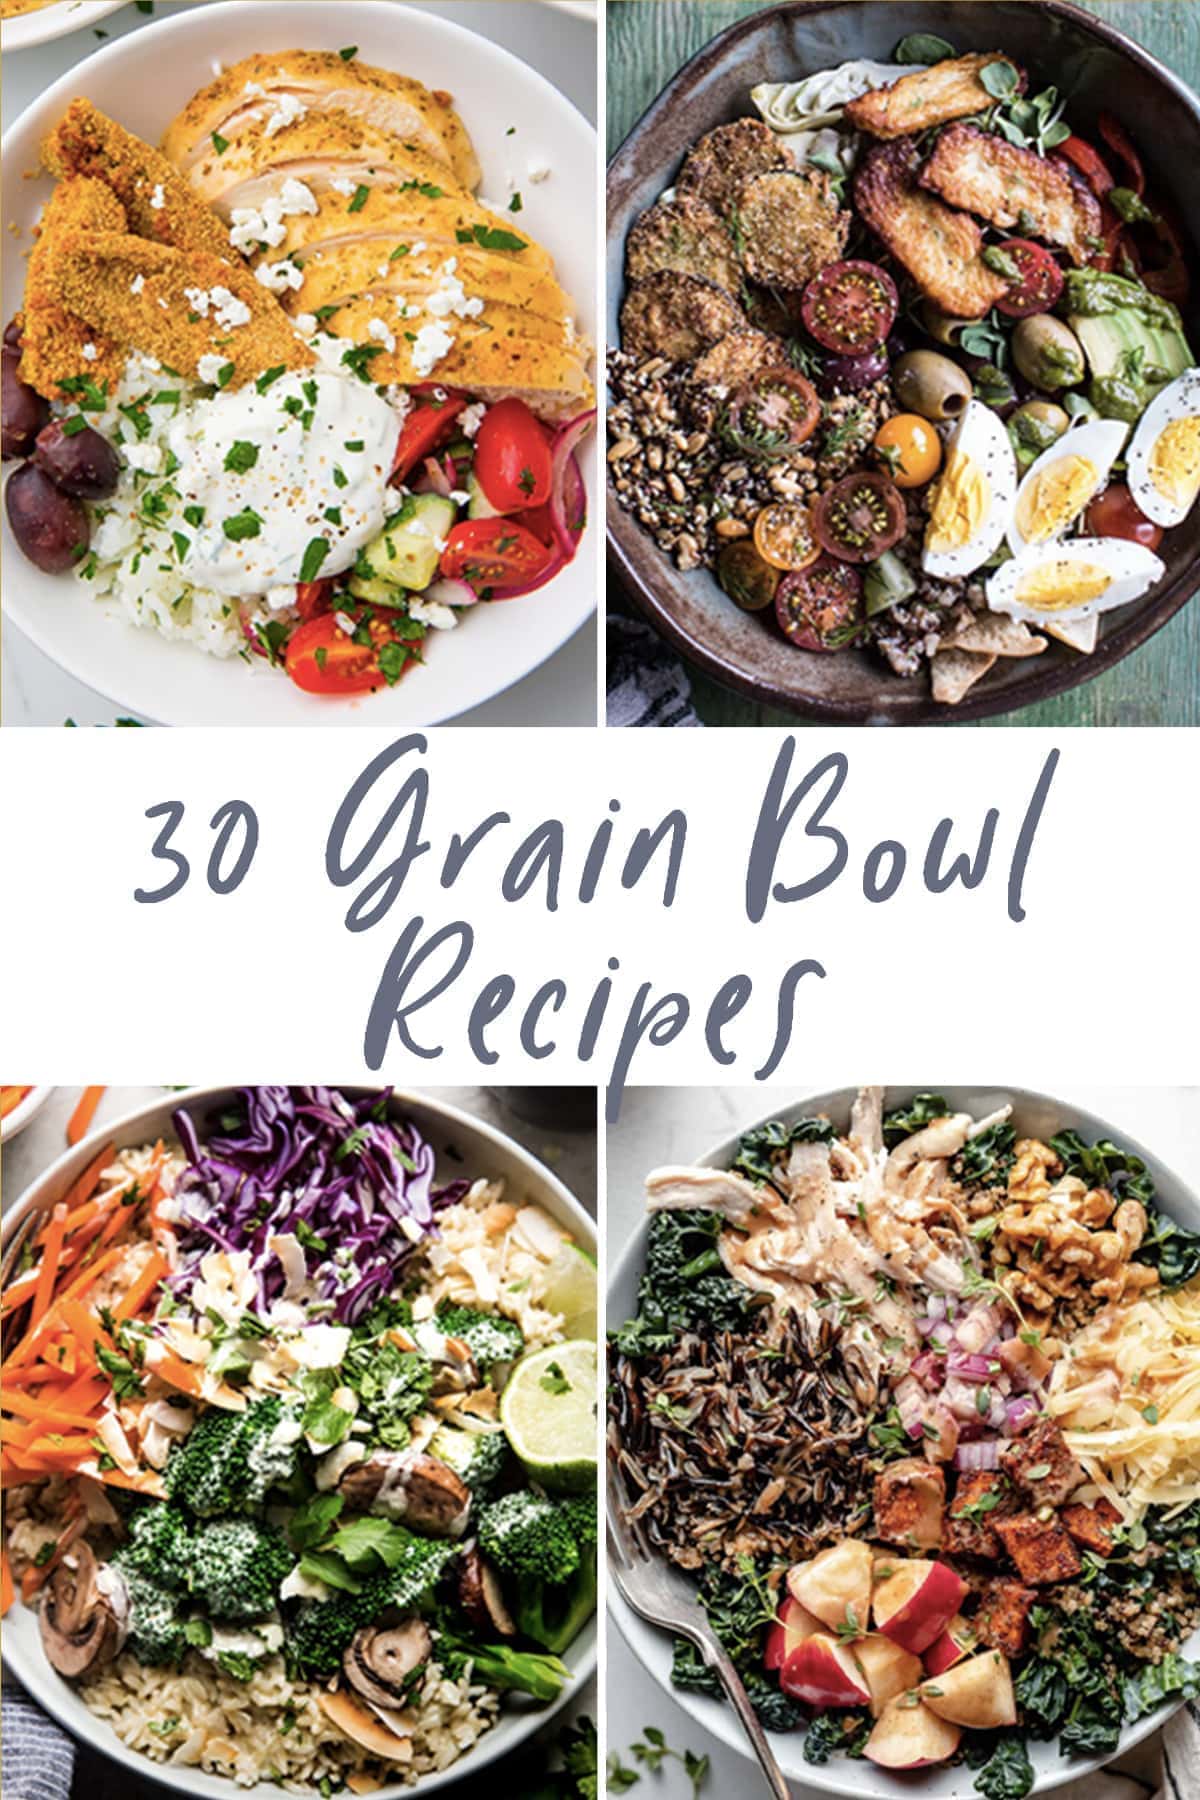 https://40aprons.com/wp-content/uploads/2021/03/30-grain-bowl-recipes-1.jpg